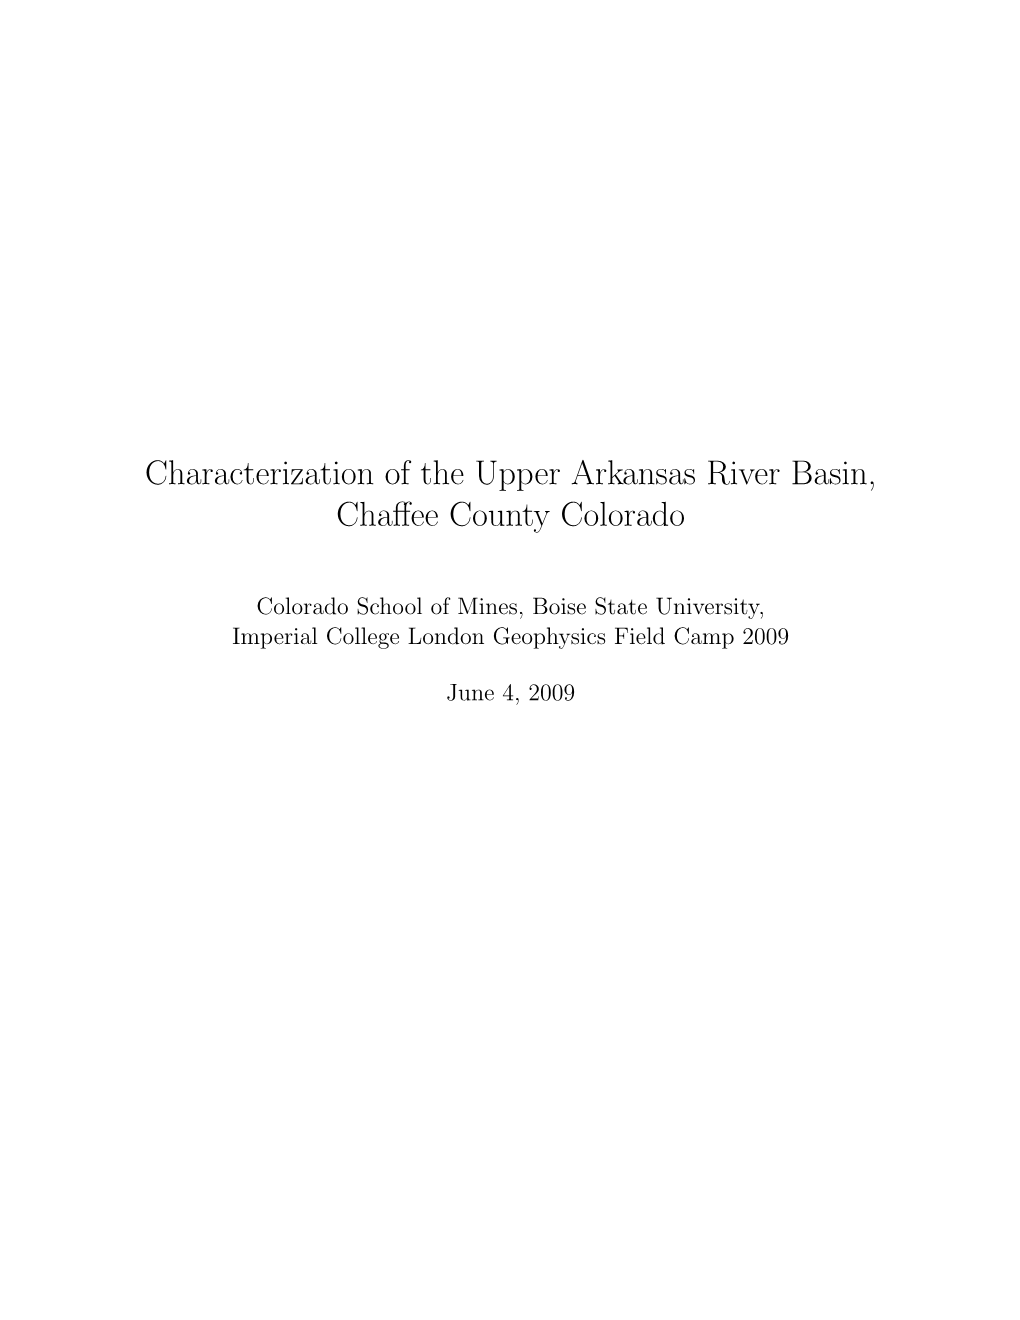 Characterization of the Upper Arkansas River Basin, Chaffee